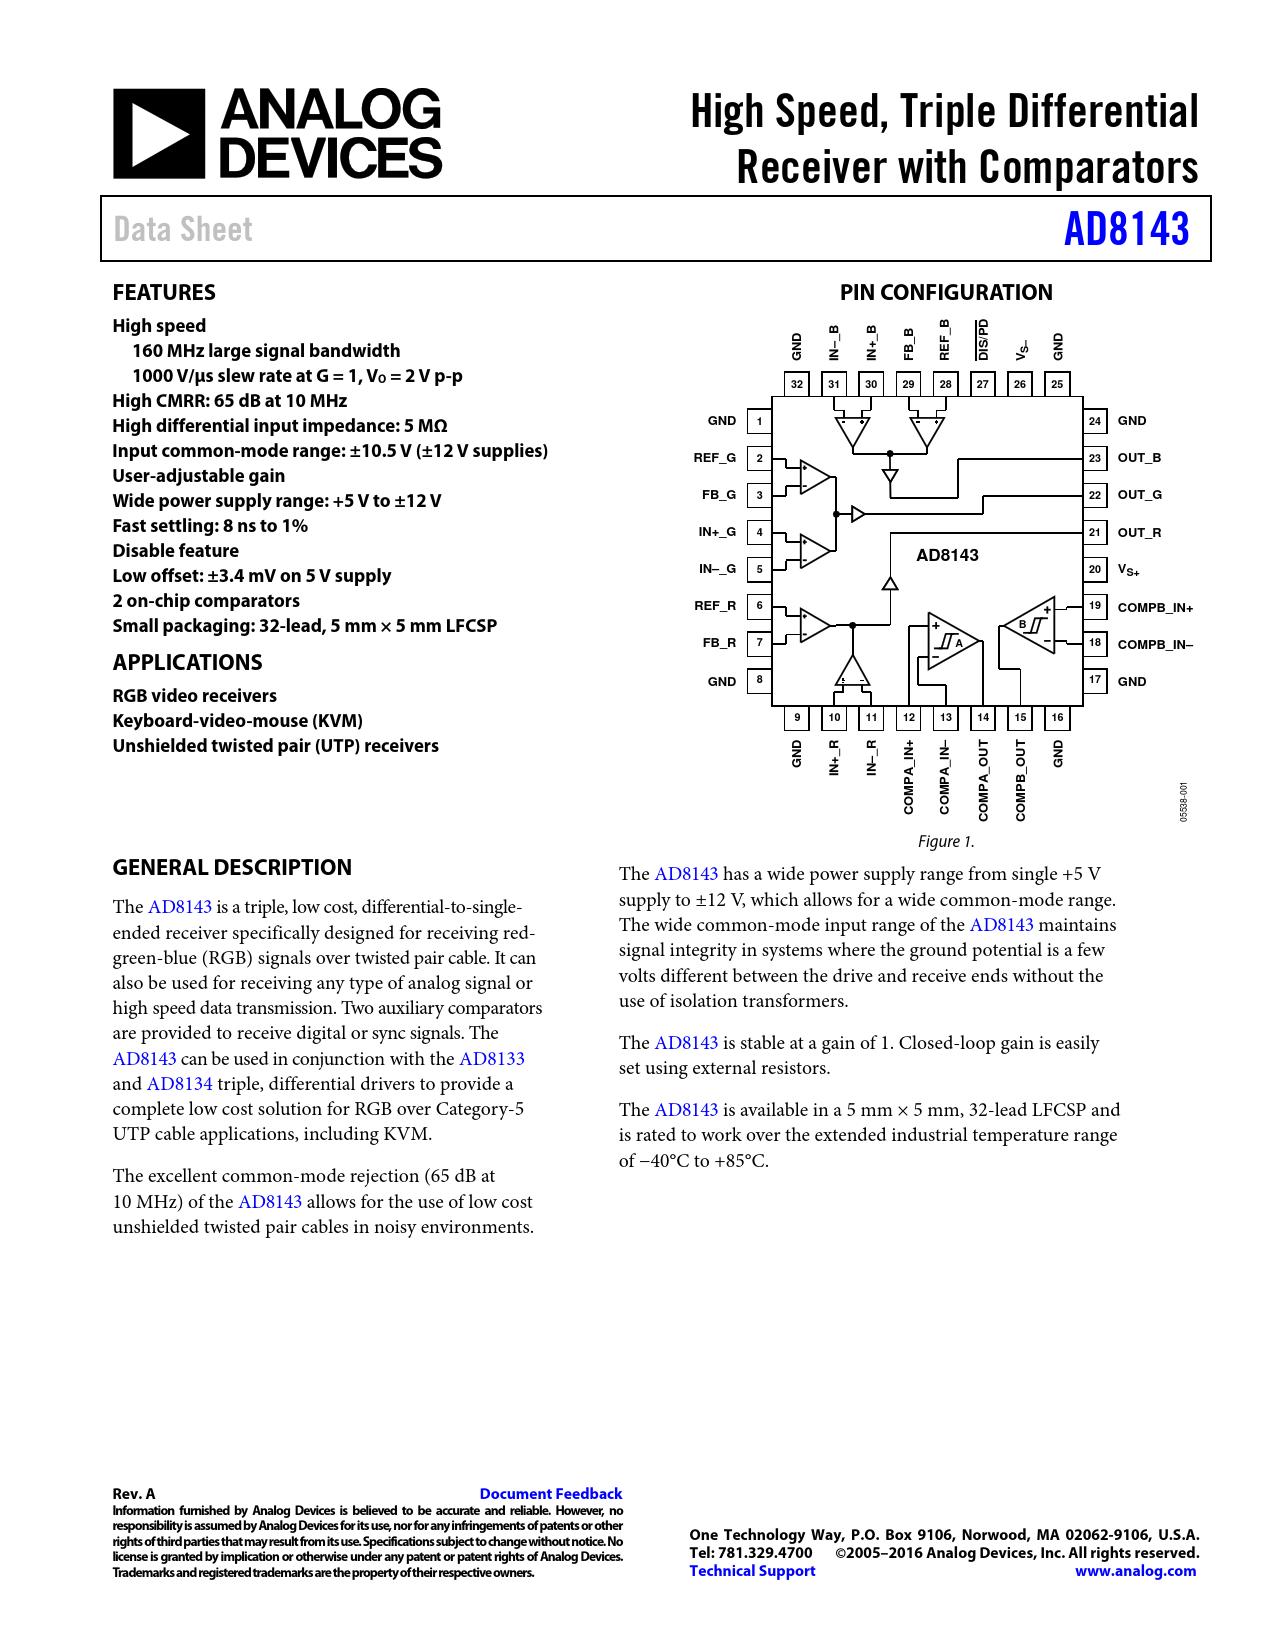 Datasheet AD8143 Analog Devices, Версия: A